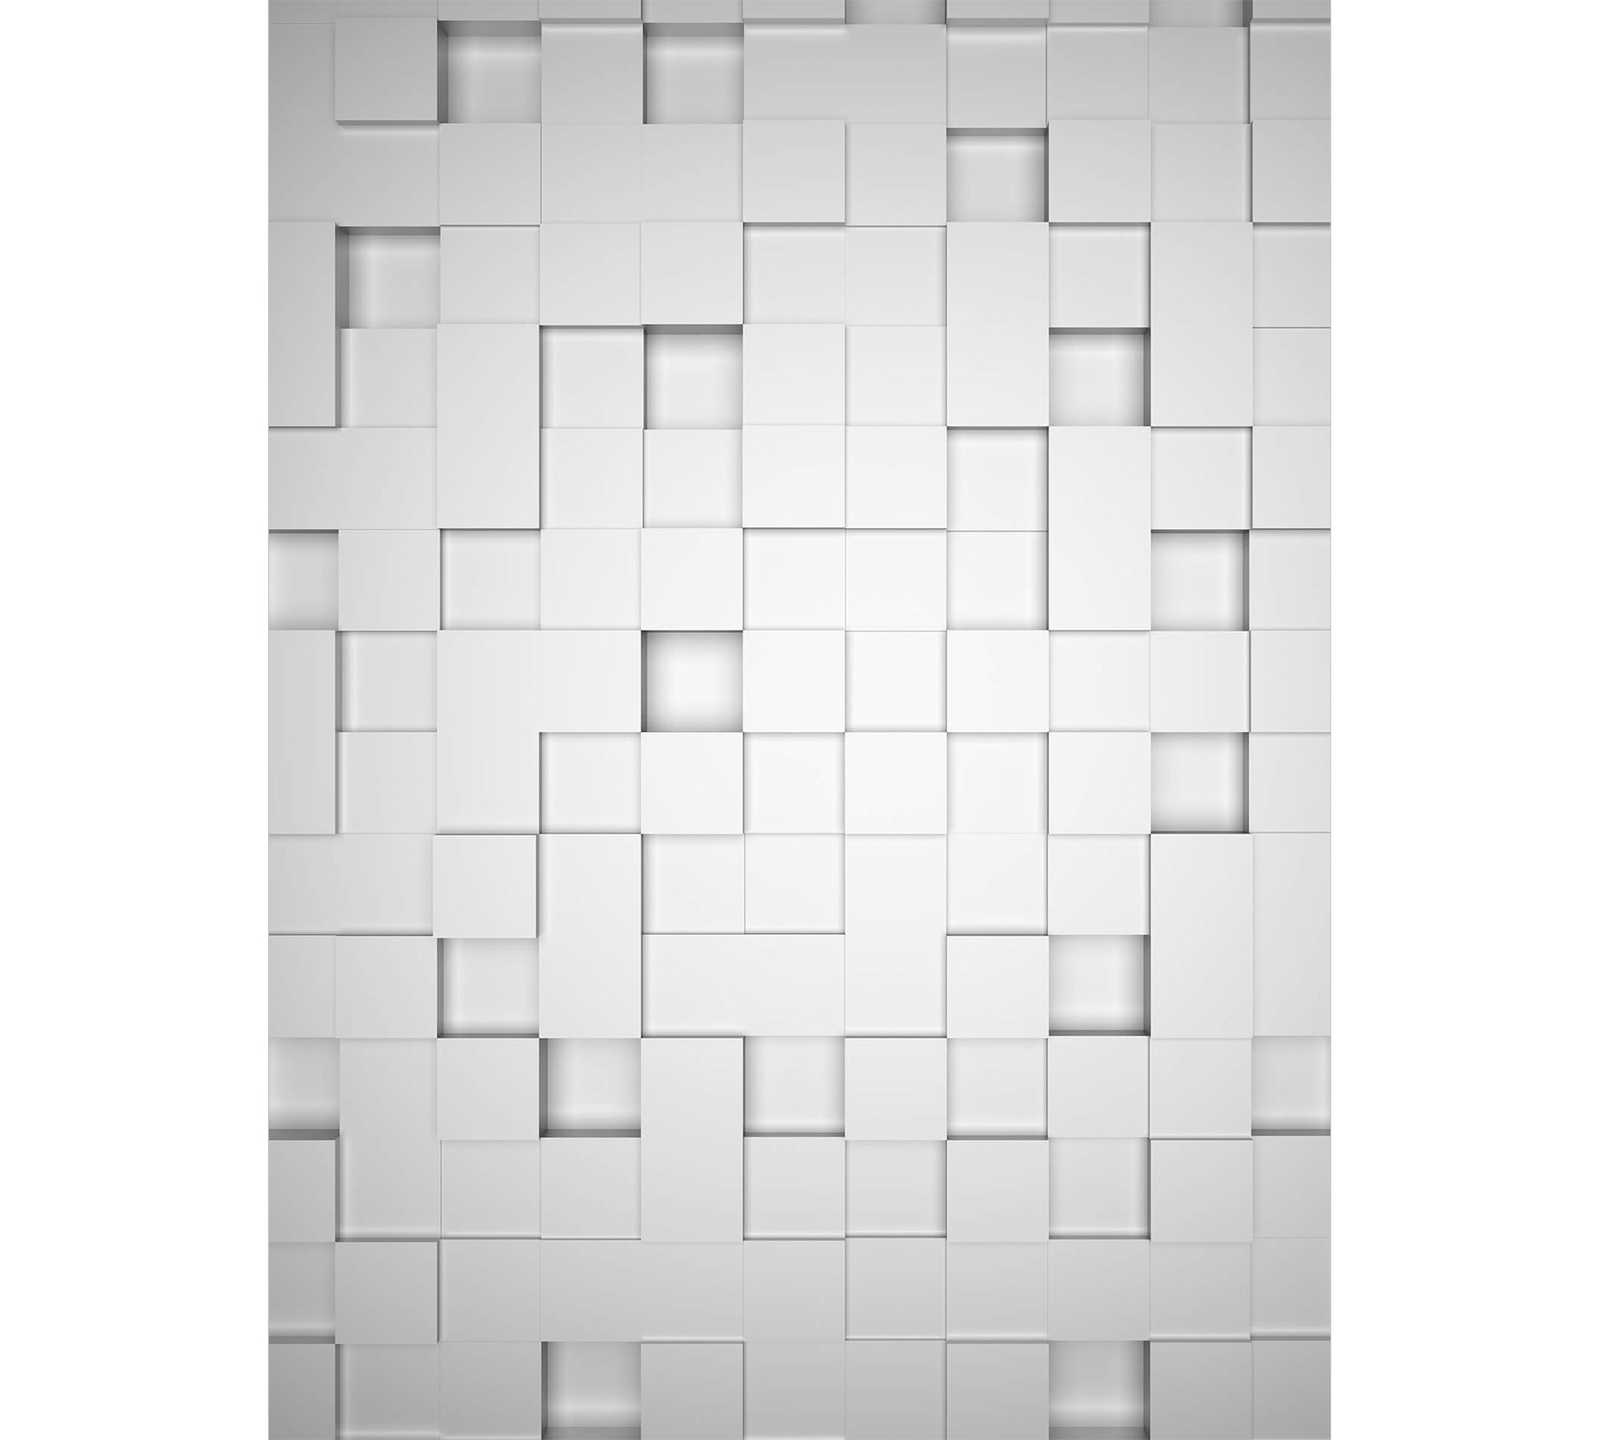         Photo wallpaper 3D cube pattern in portrait format - white, grey
    